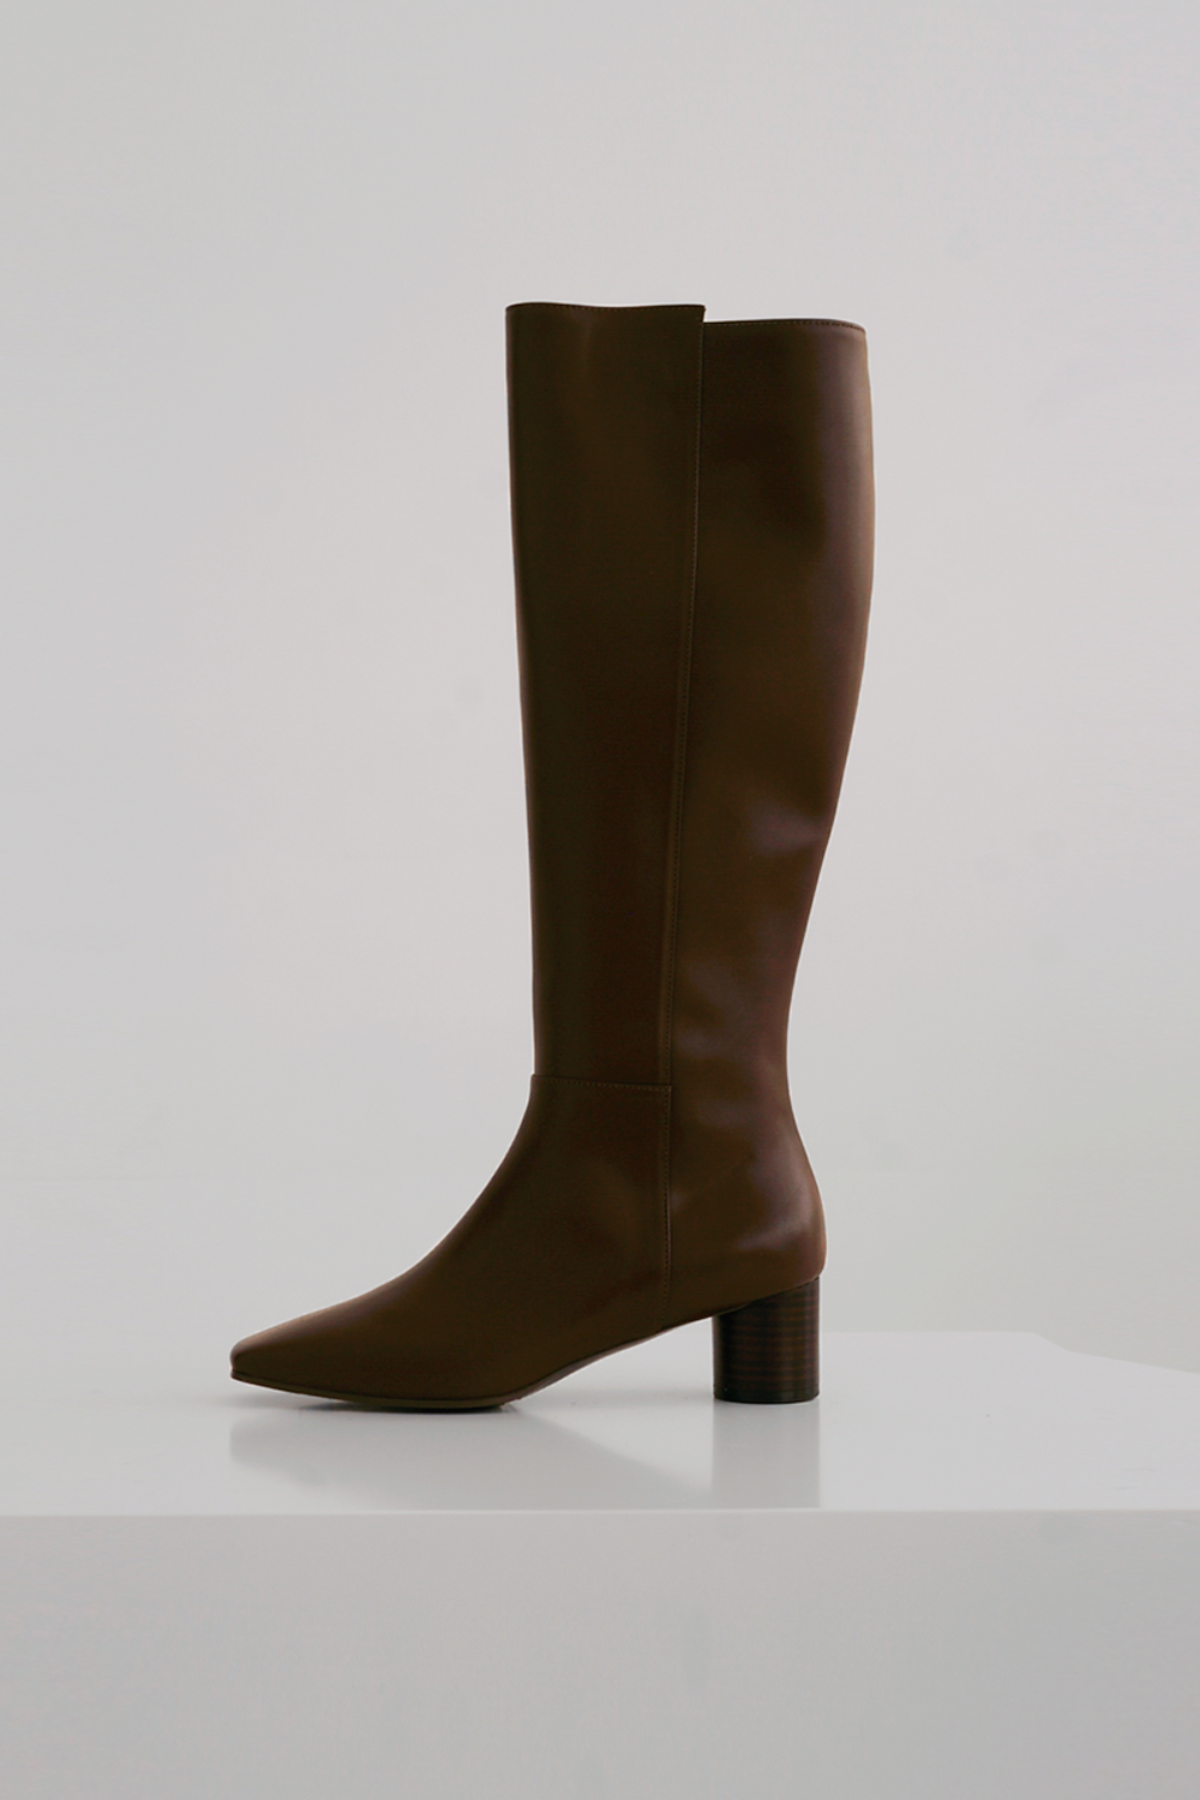 ANTHÈSE ruben long boots, brown